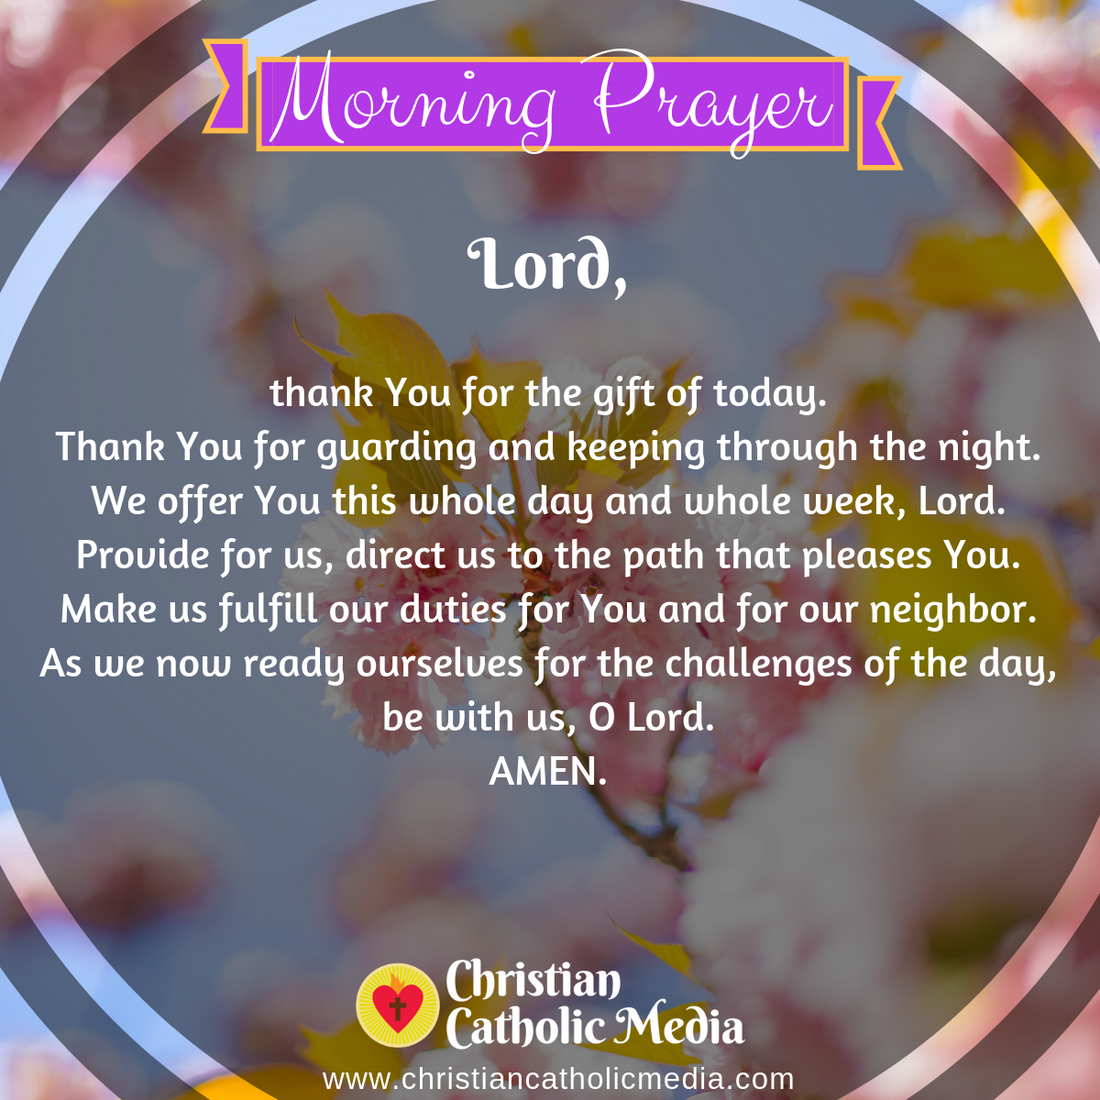 Morning Prayer Catholic Wednesday 4-22-2020